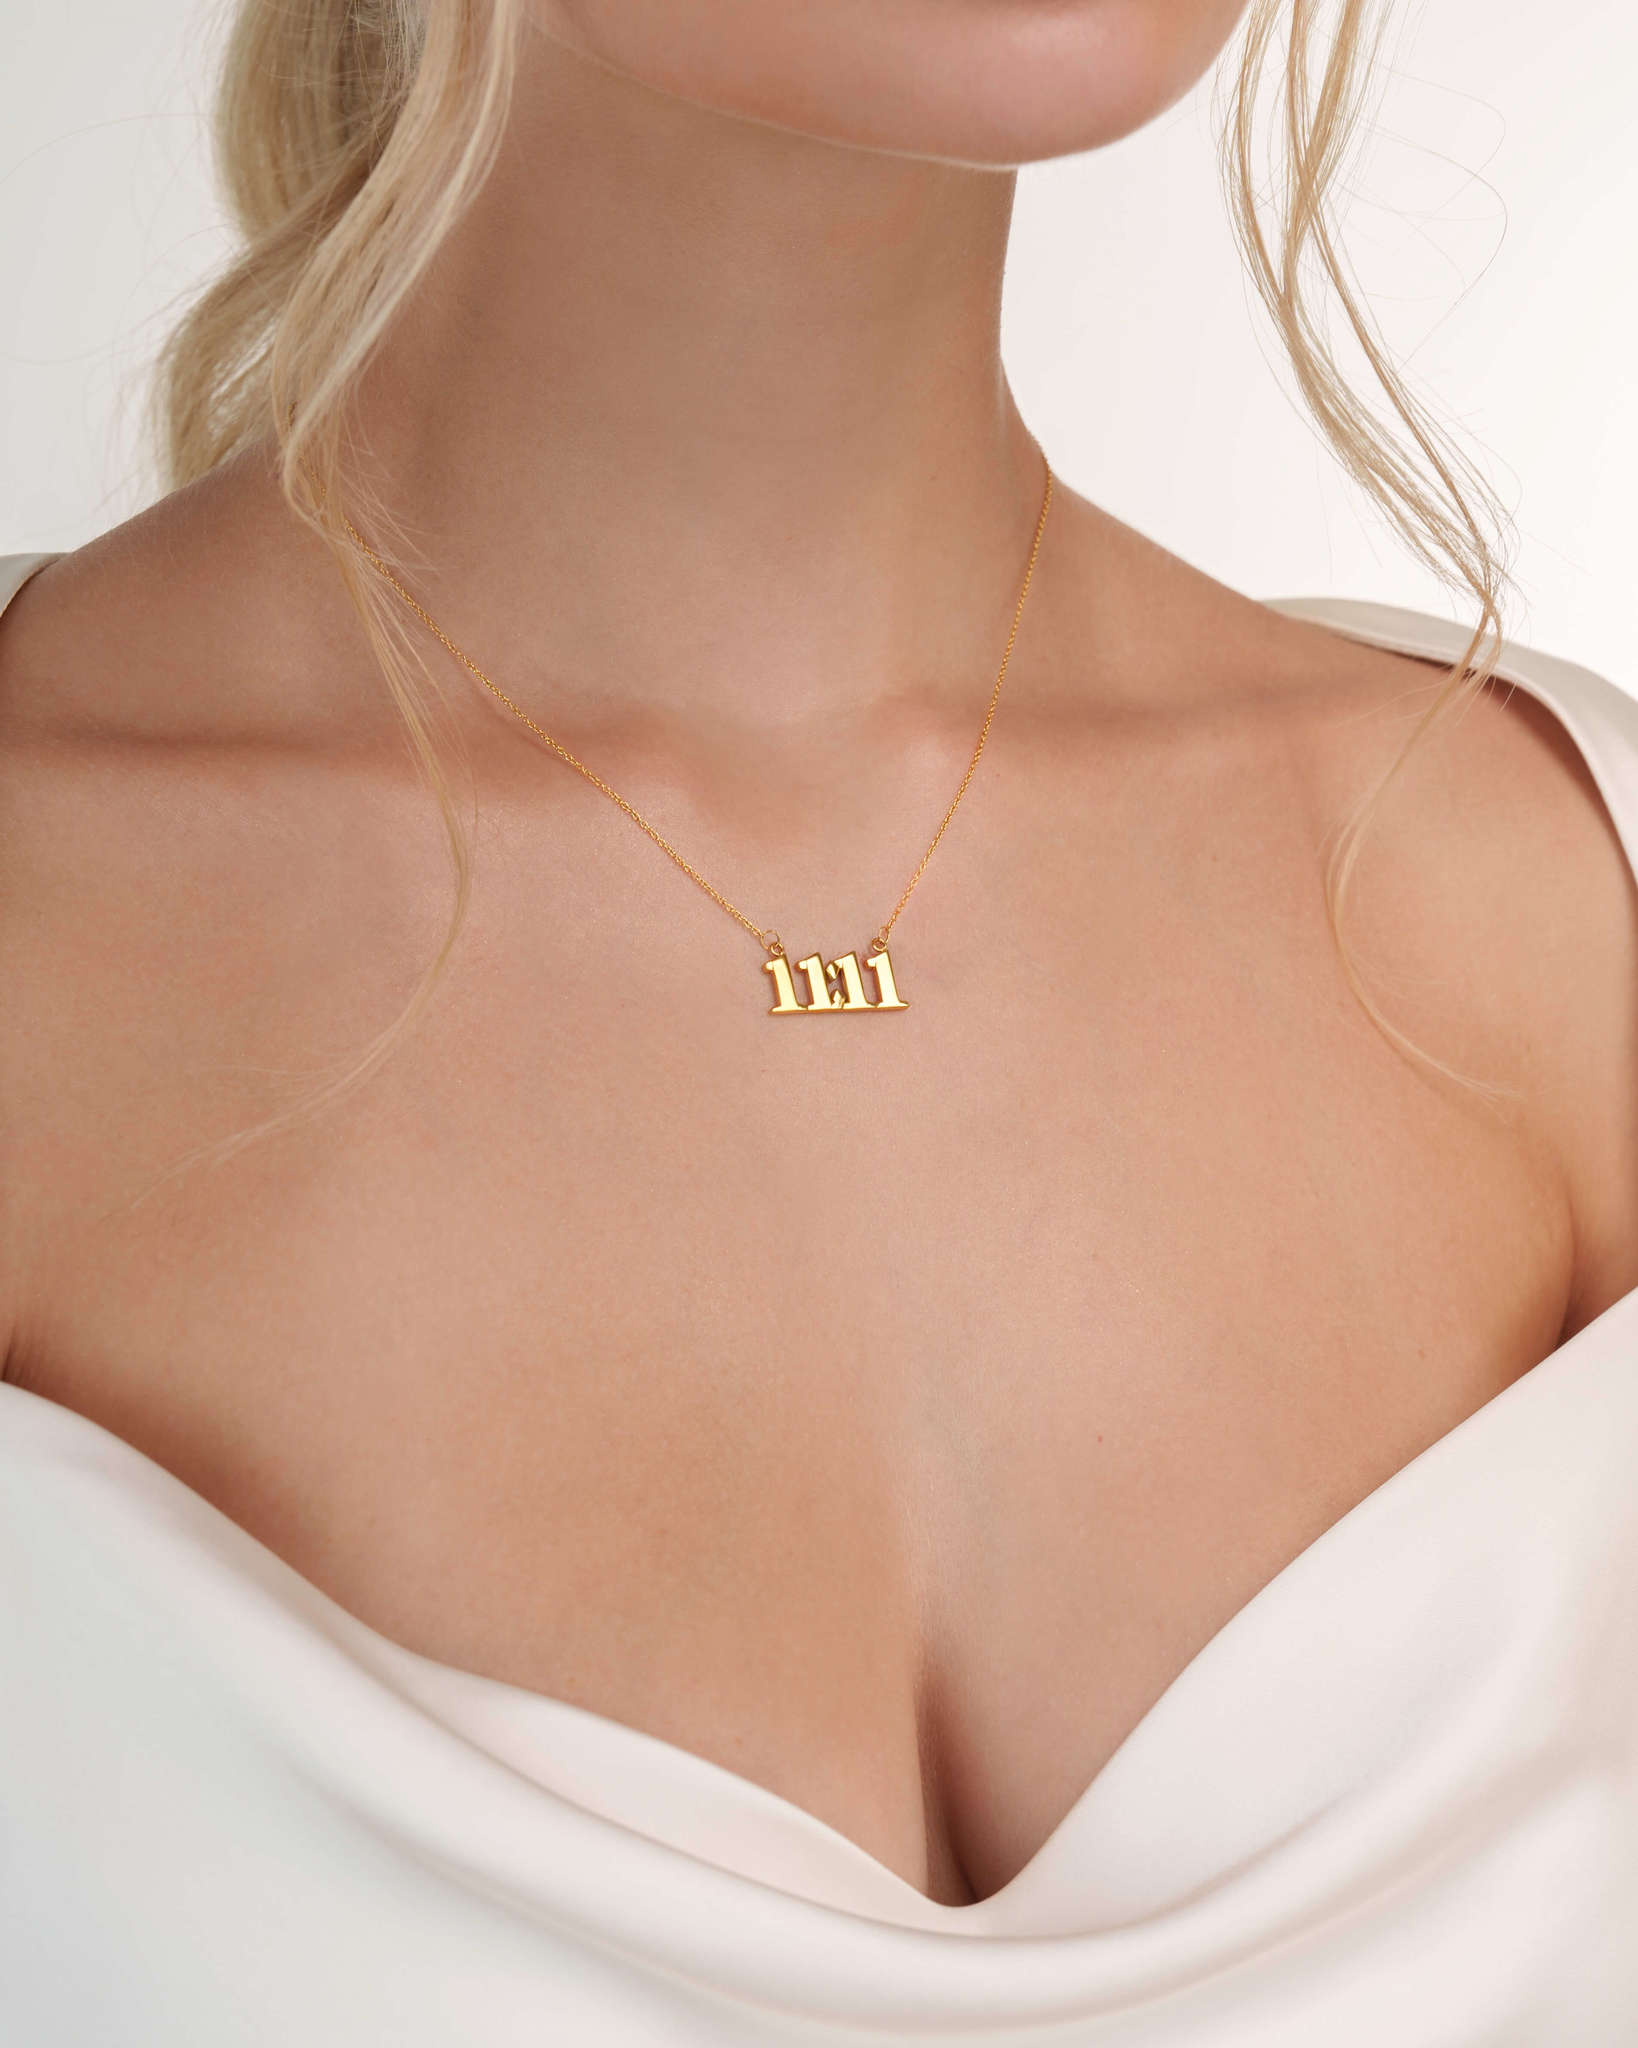 11:11 Pendant Necklace | Saint Jewelry